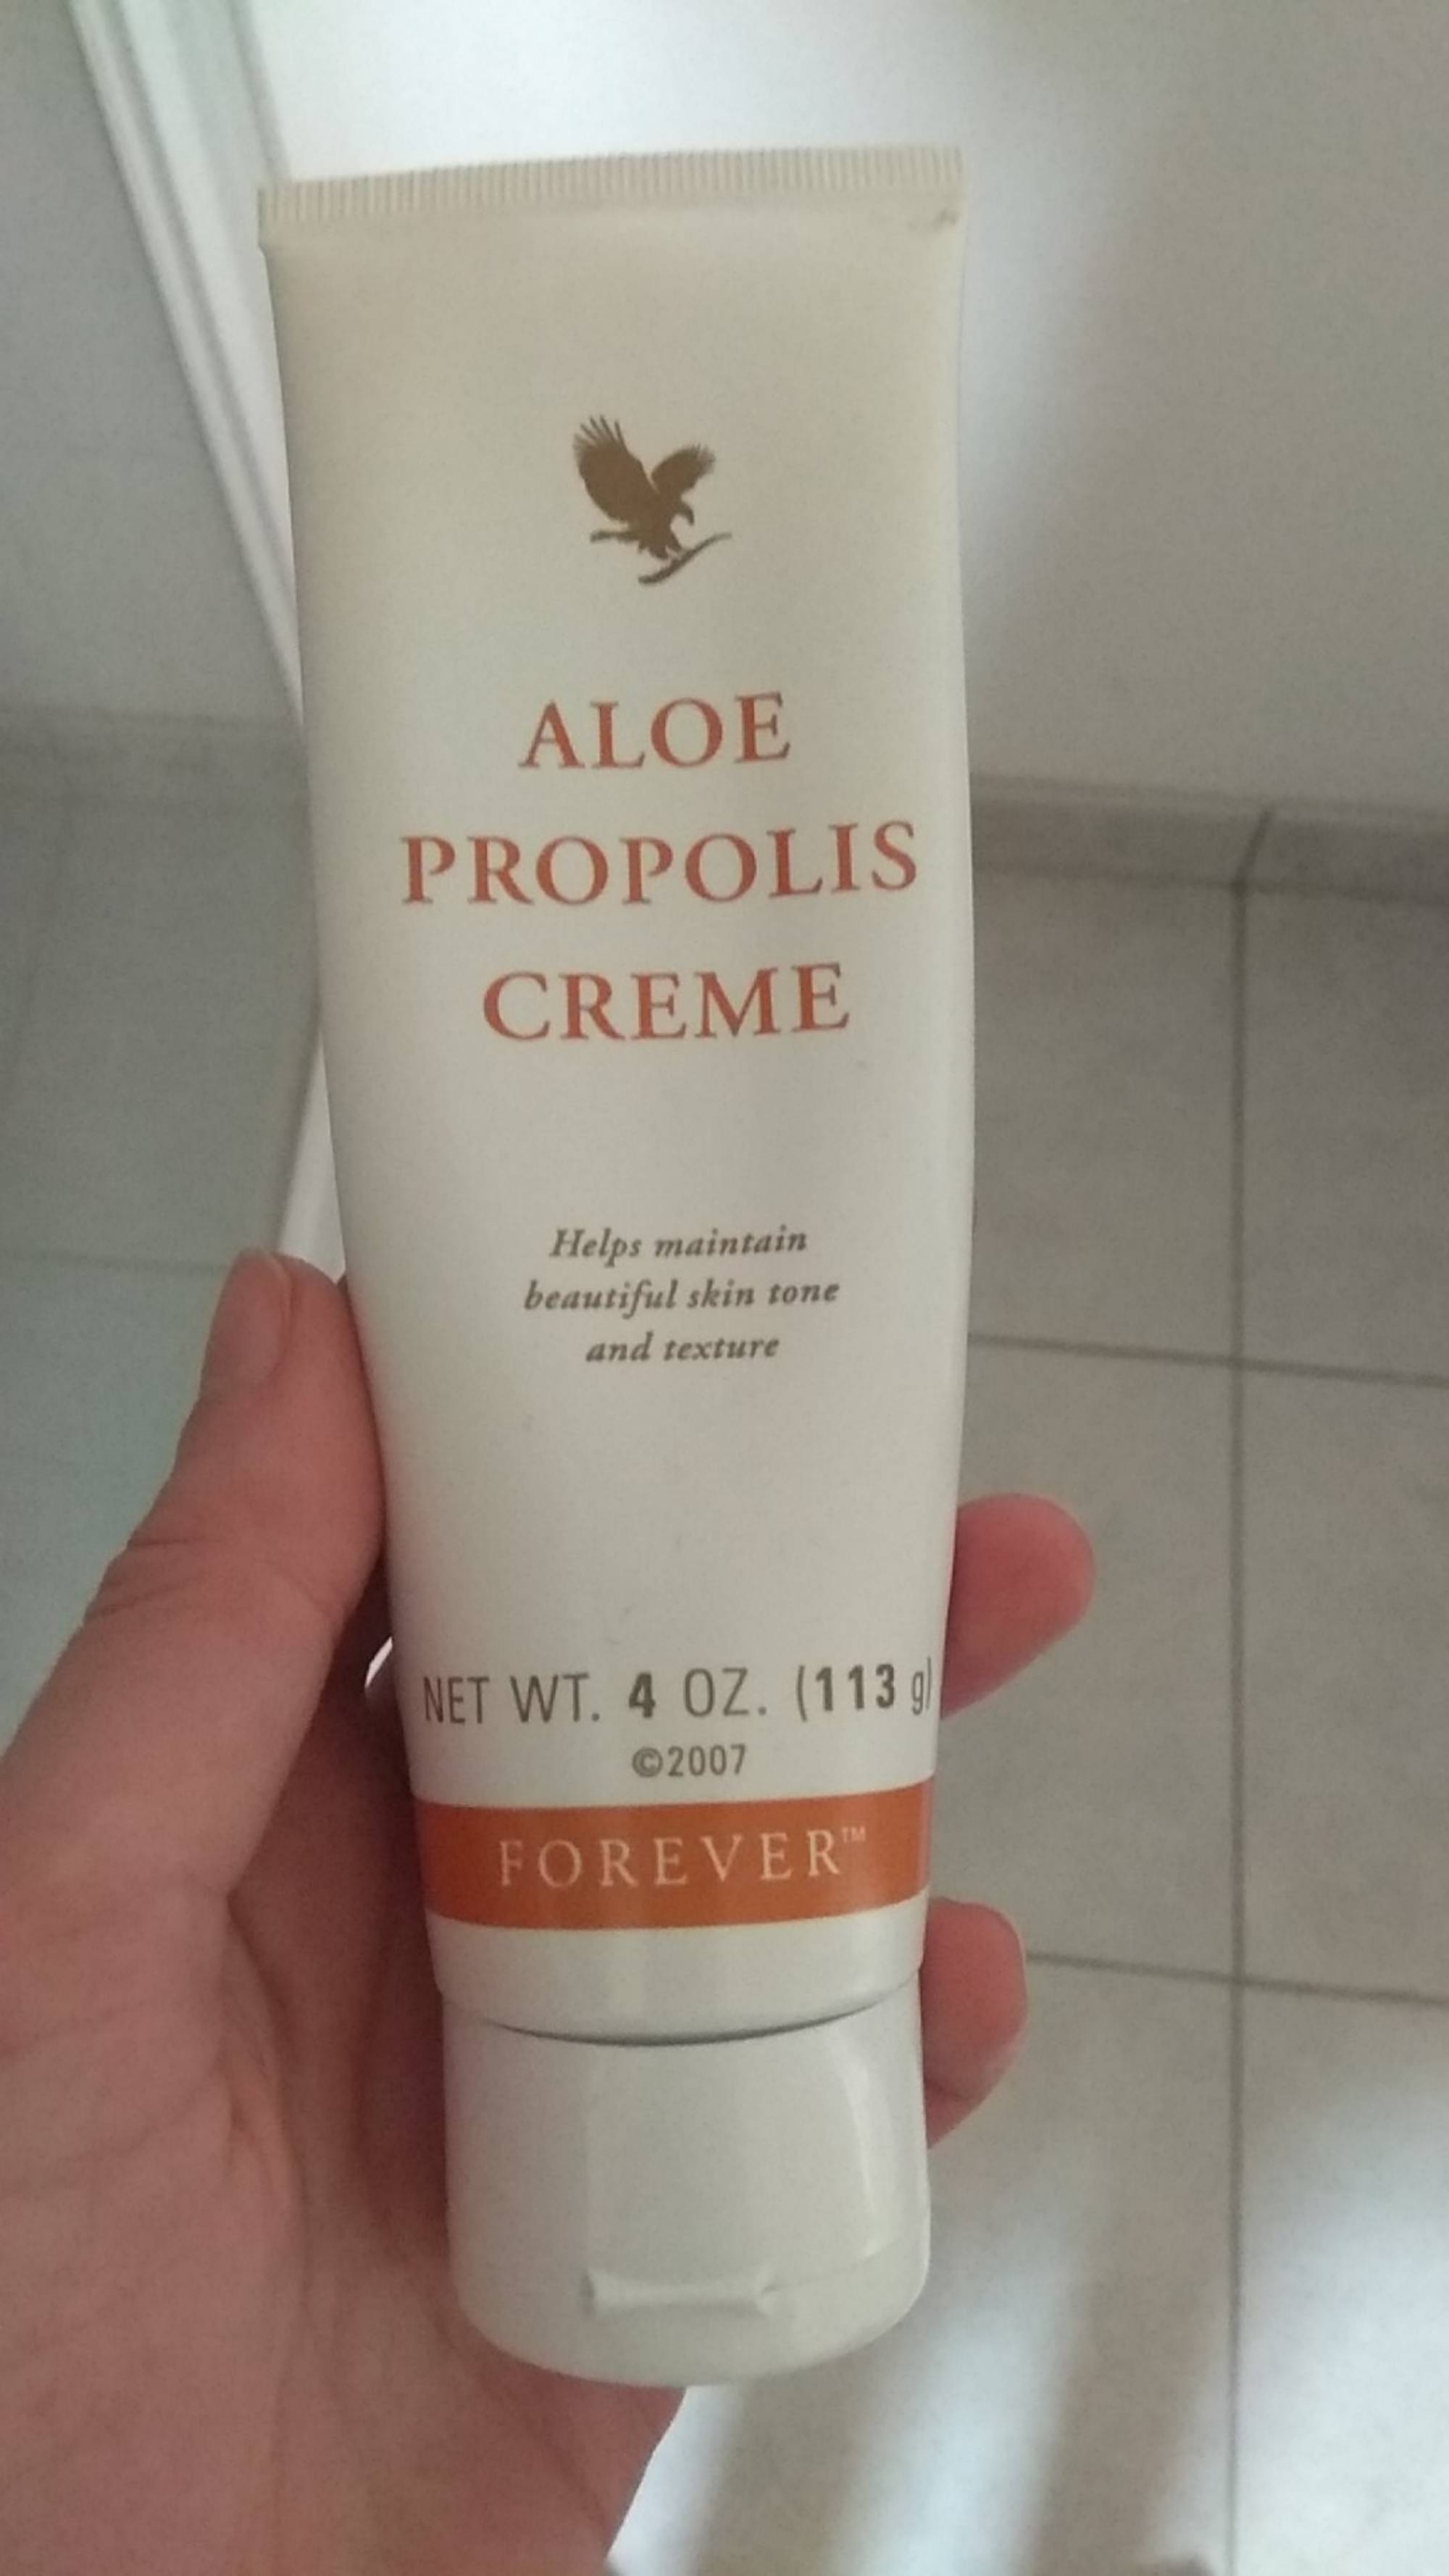 FOREVER - Aloe propolis creme